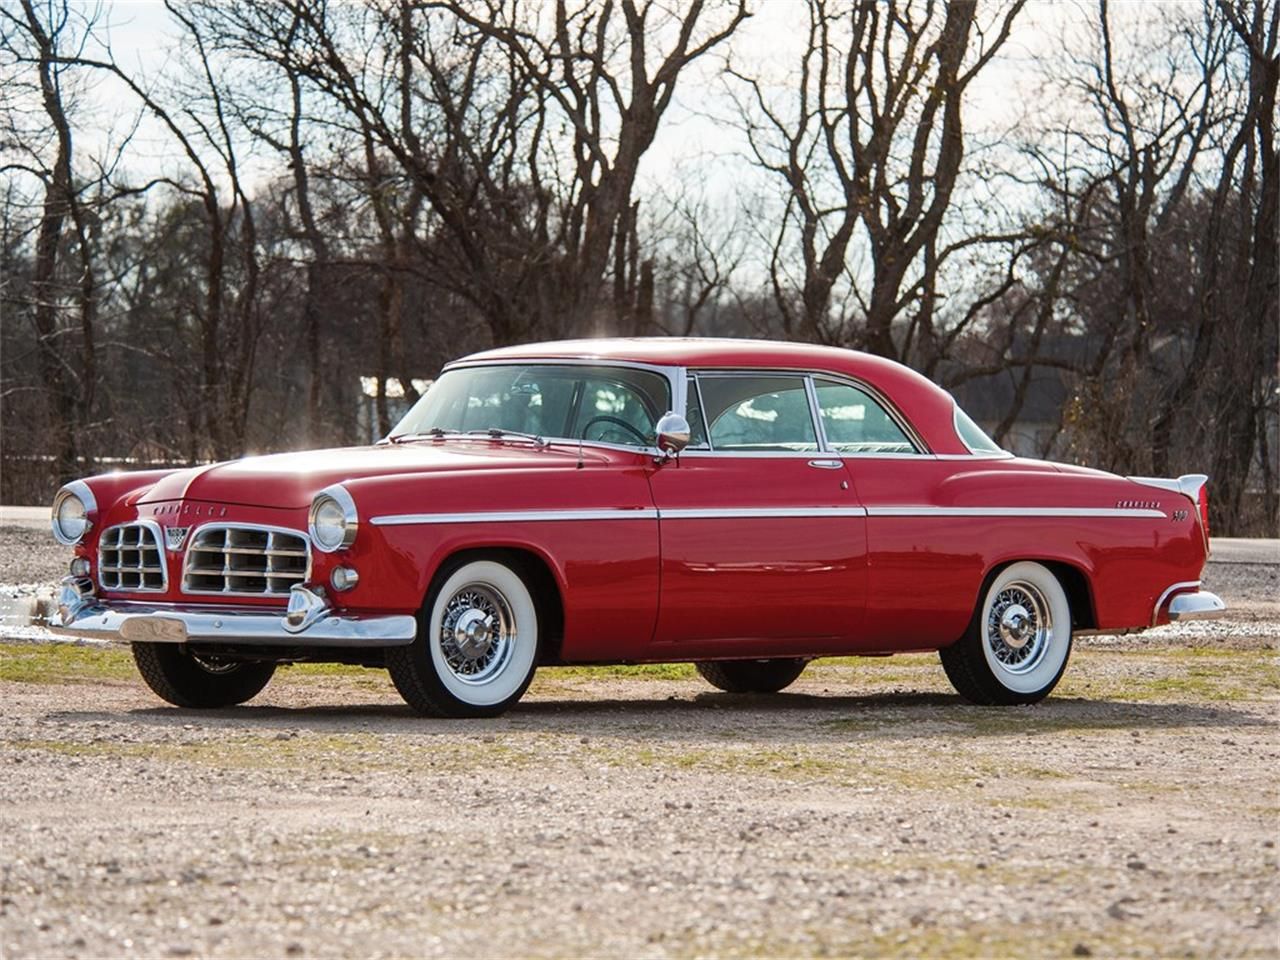 the 1955 Chrysler 300 parked outside